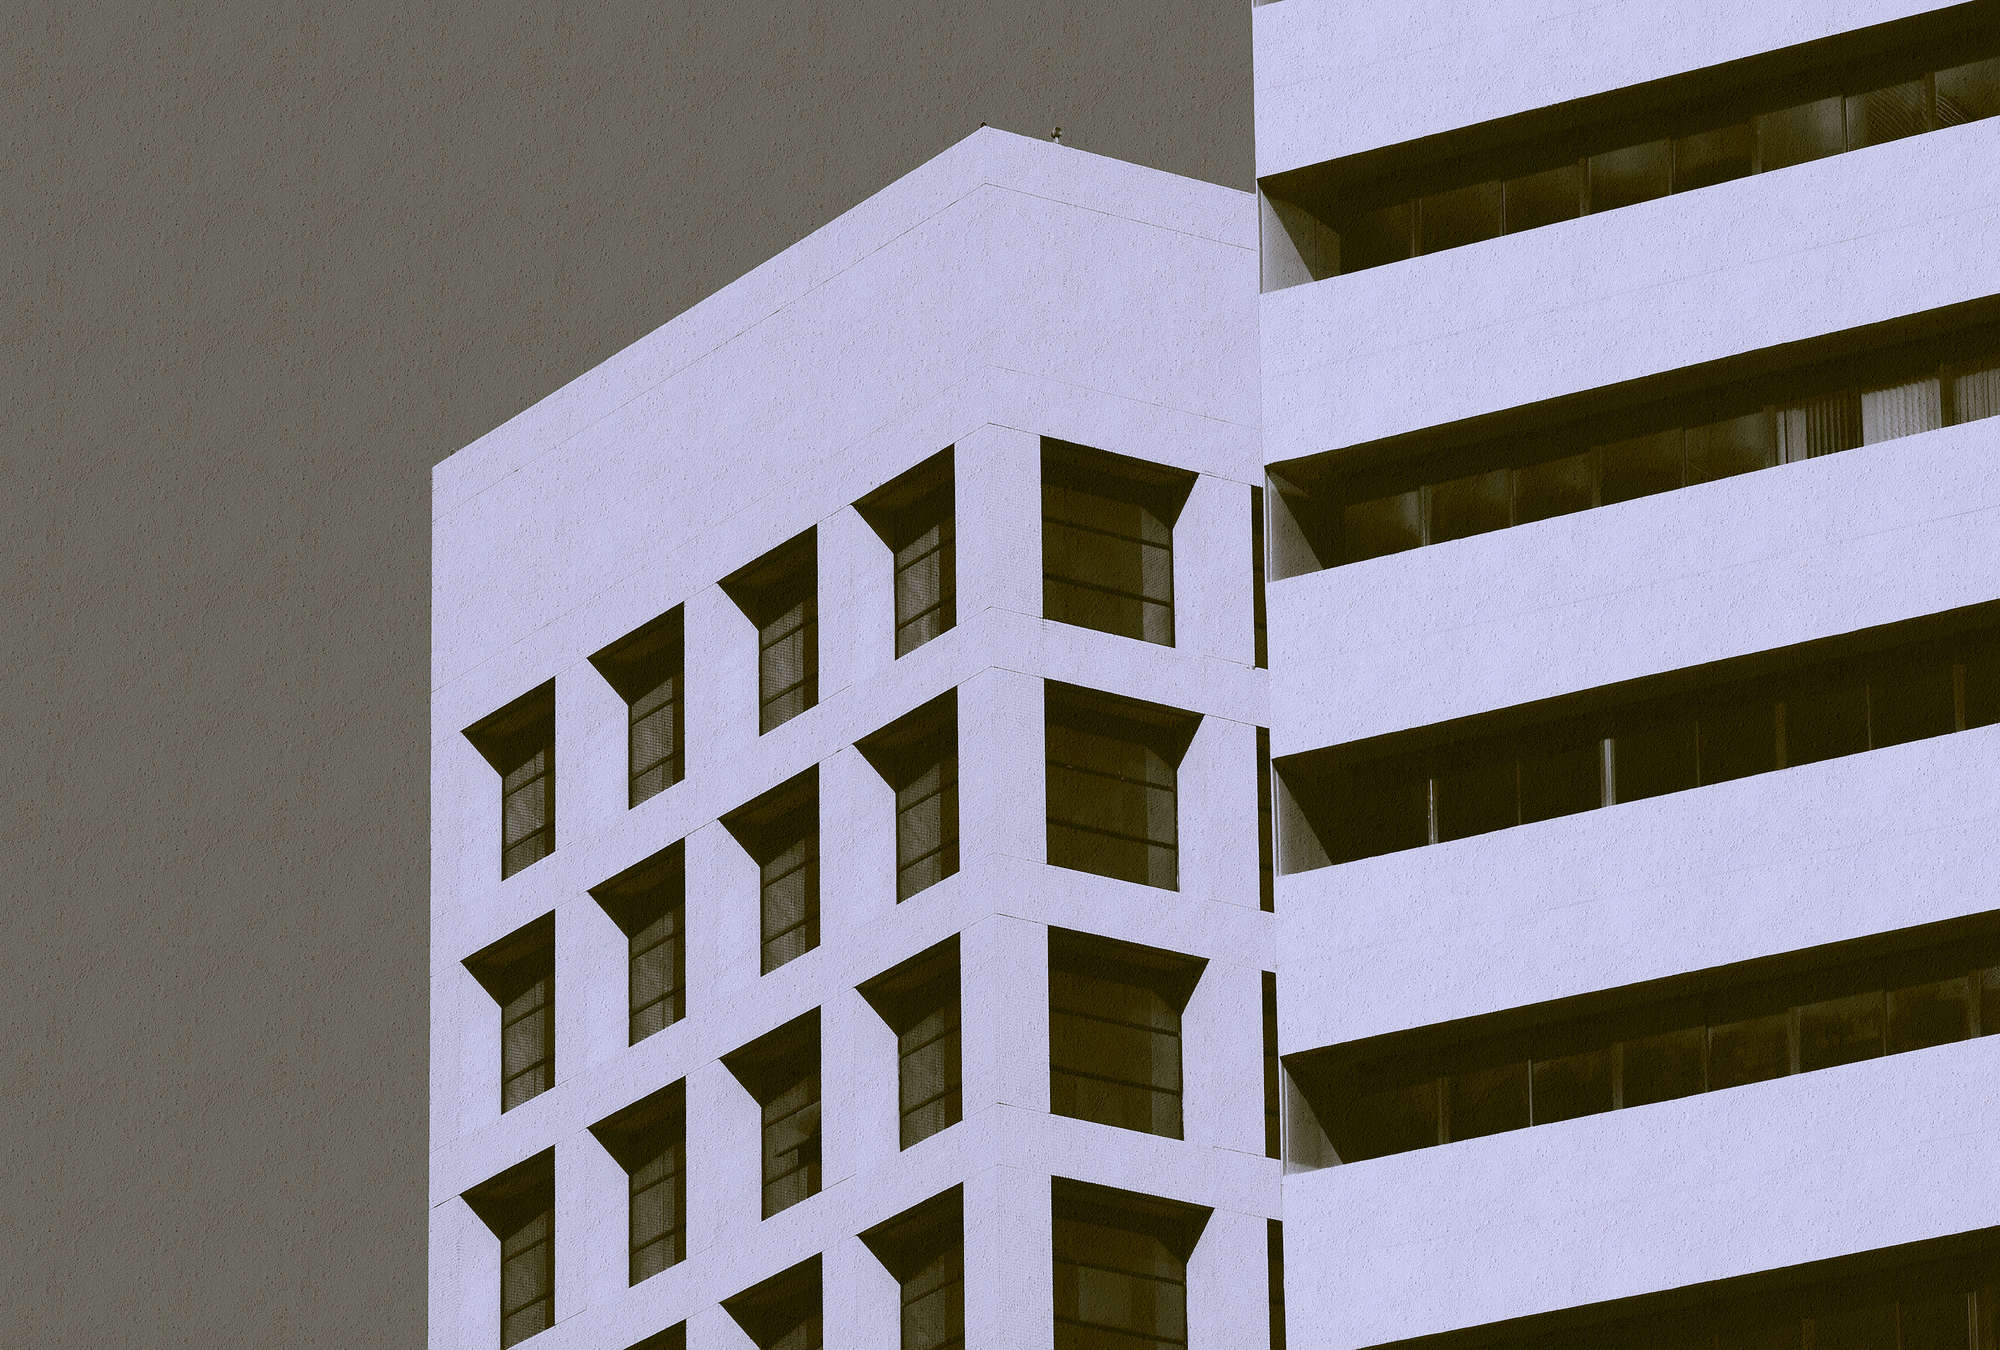             Skyscraper 1 - Photo wallpaper with retro-style building in Raupuz structure - Black, Taupe | Premium smooth non-woven
        